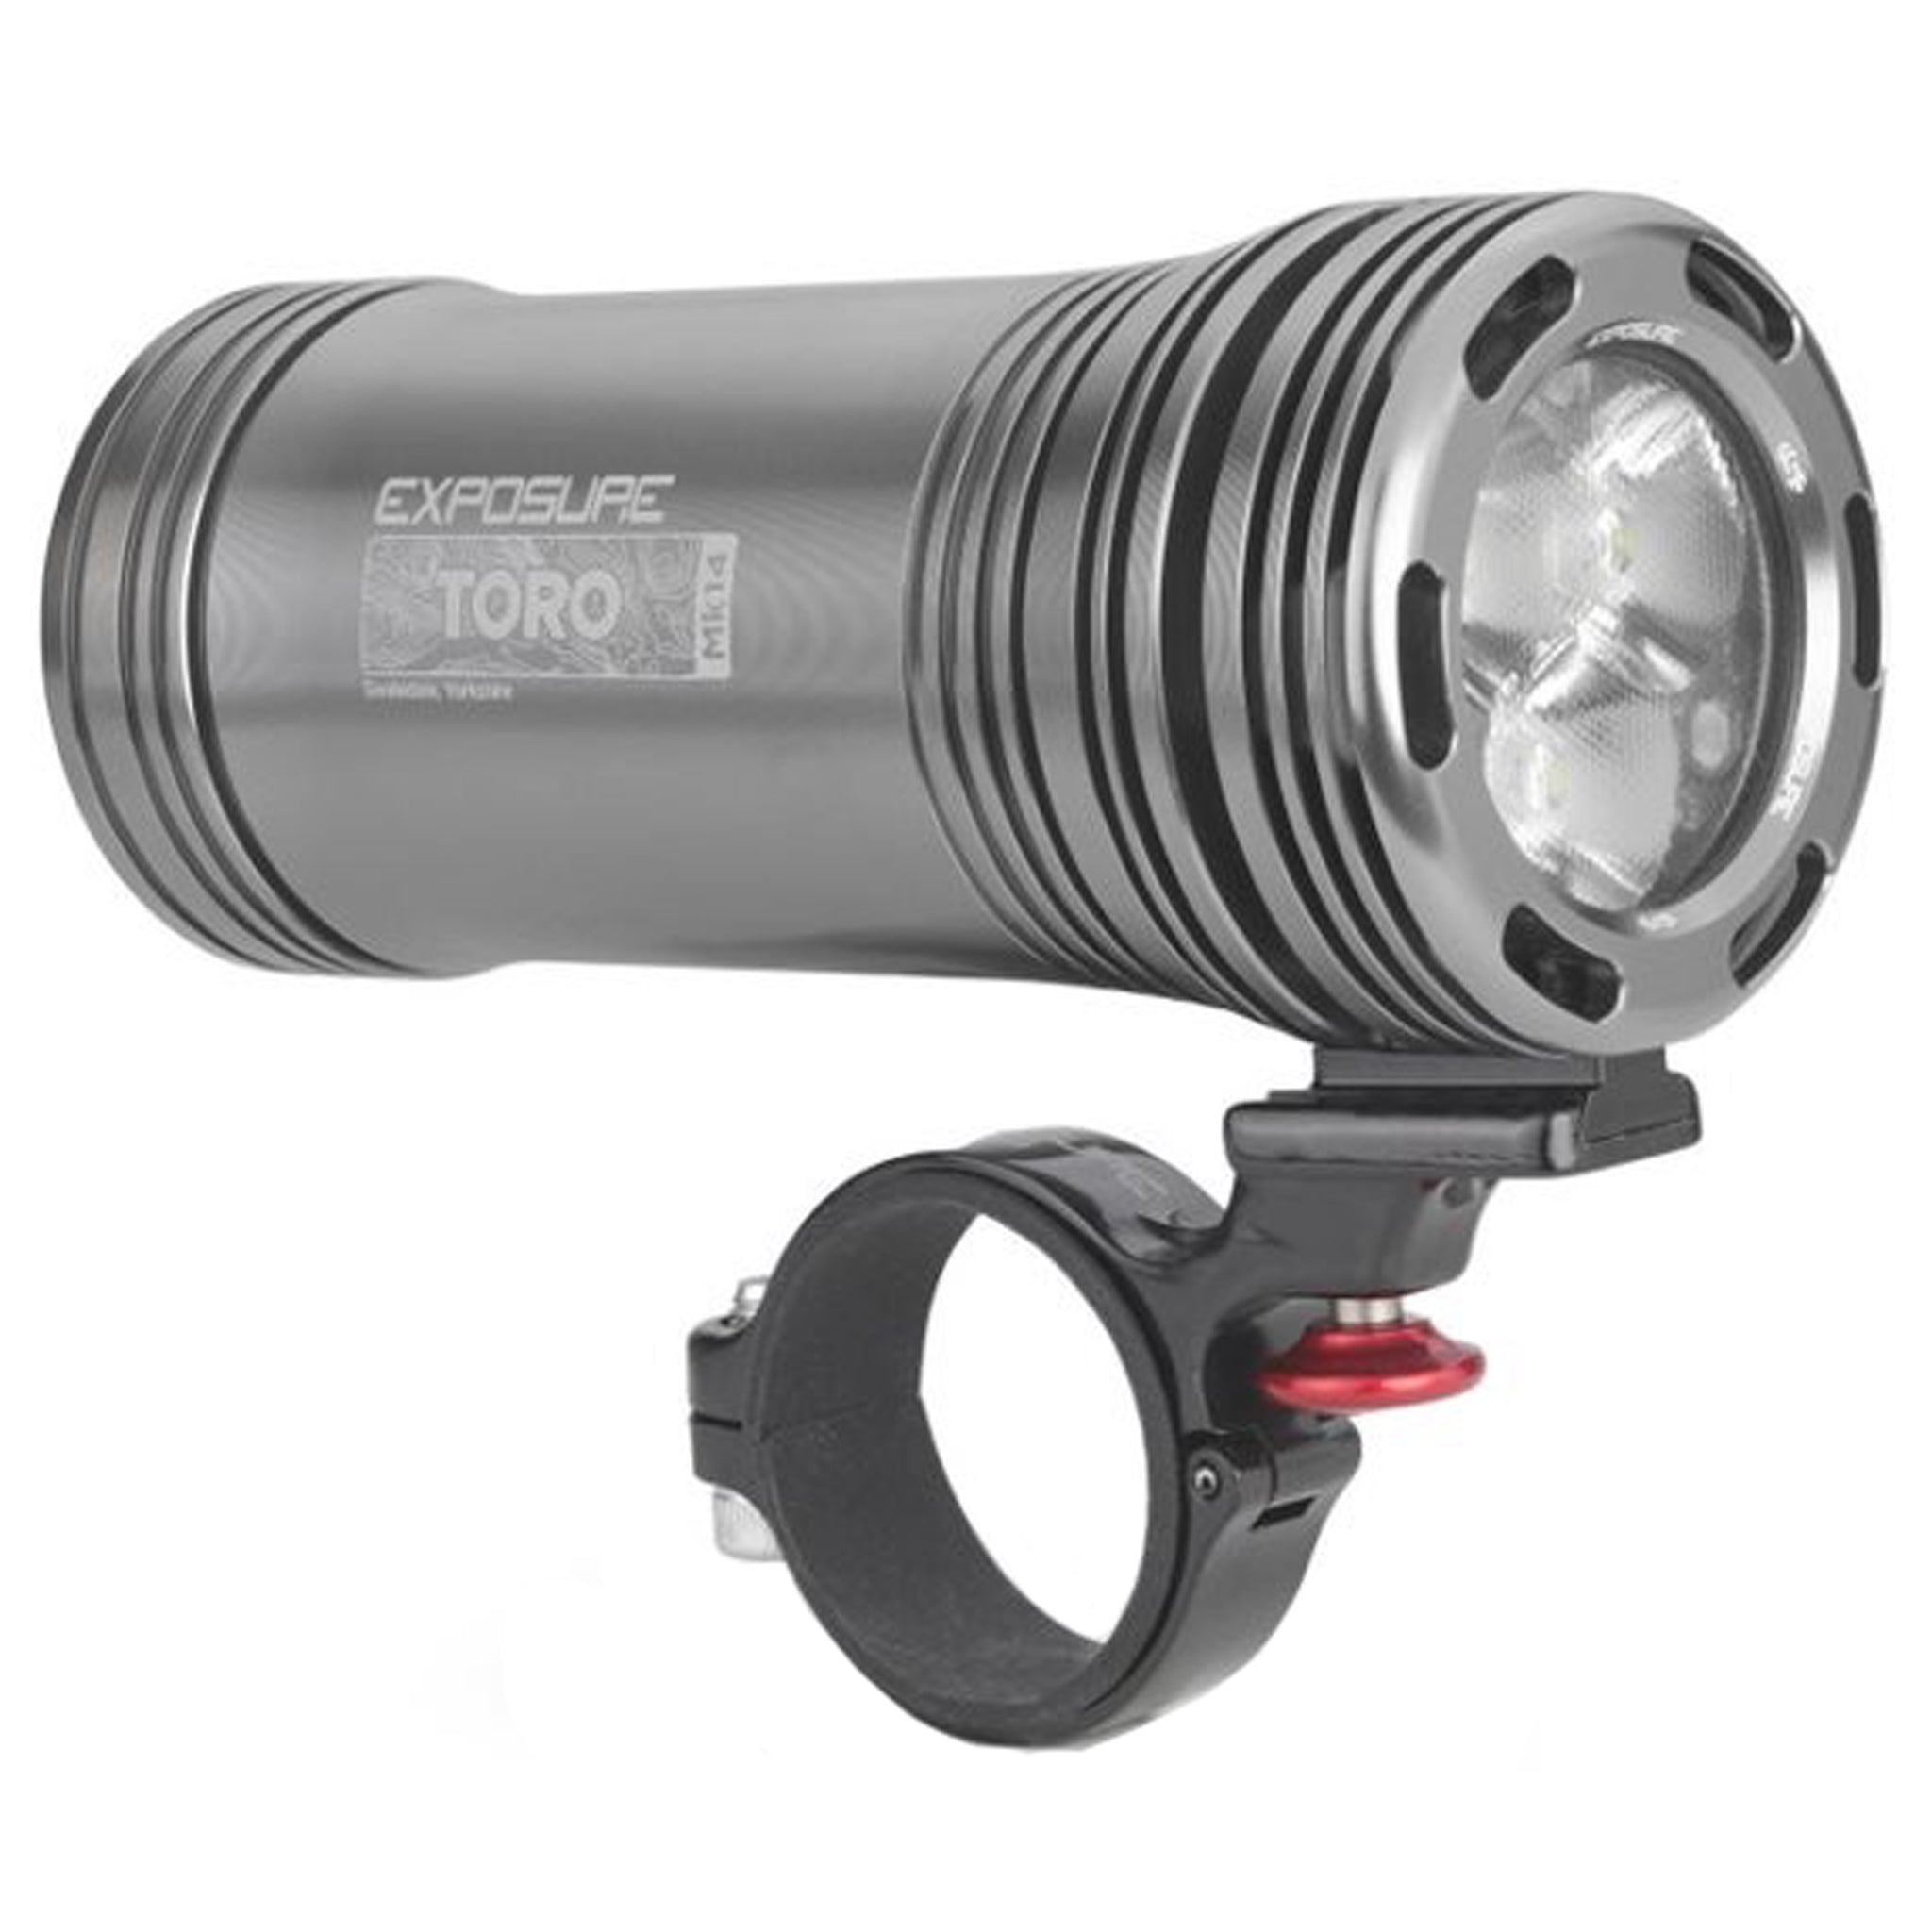 Exposure Lights Toro Mk14 Cordless Light System